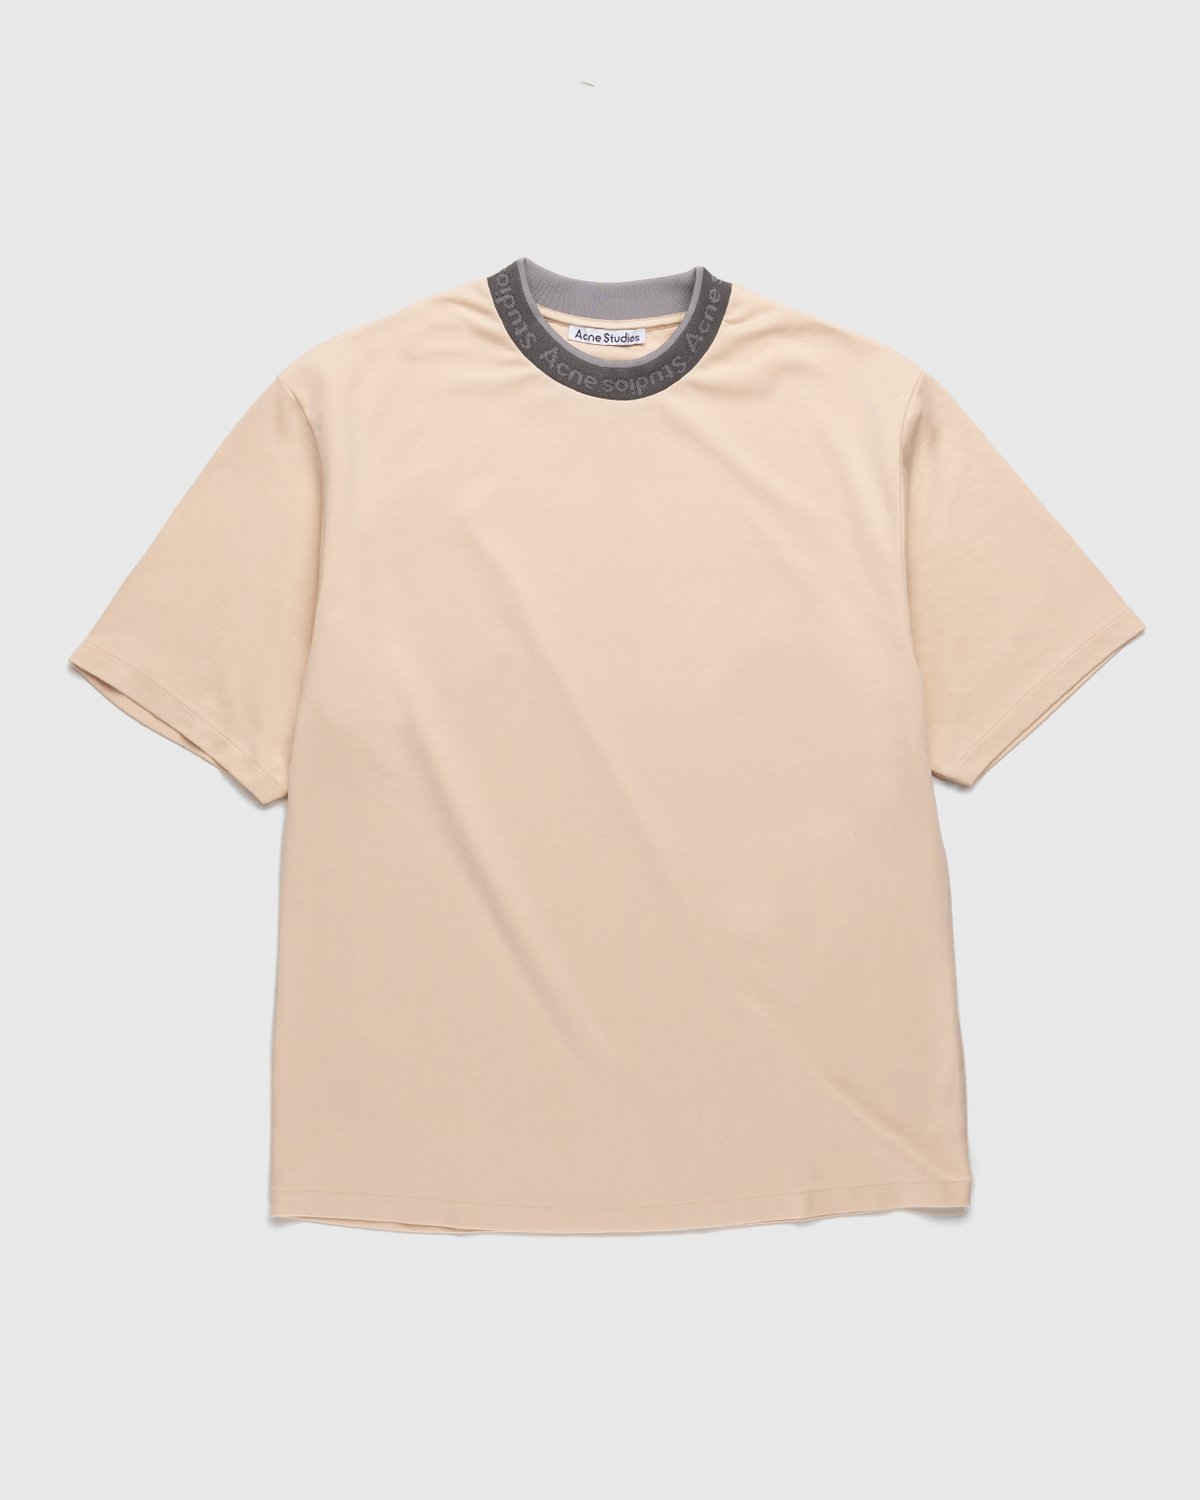 Acne Studios - Logo Collar T-Shirt Cream Beige - Clothing - Beige - Image 1